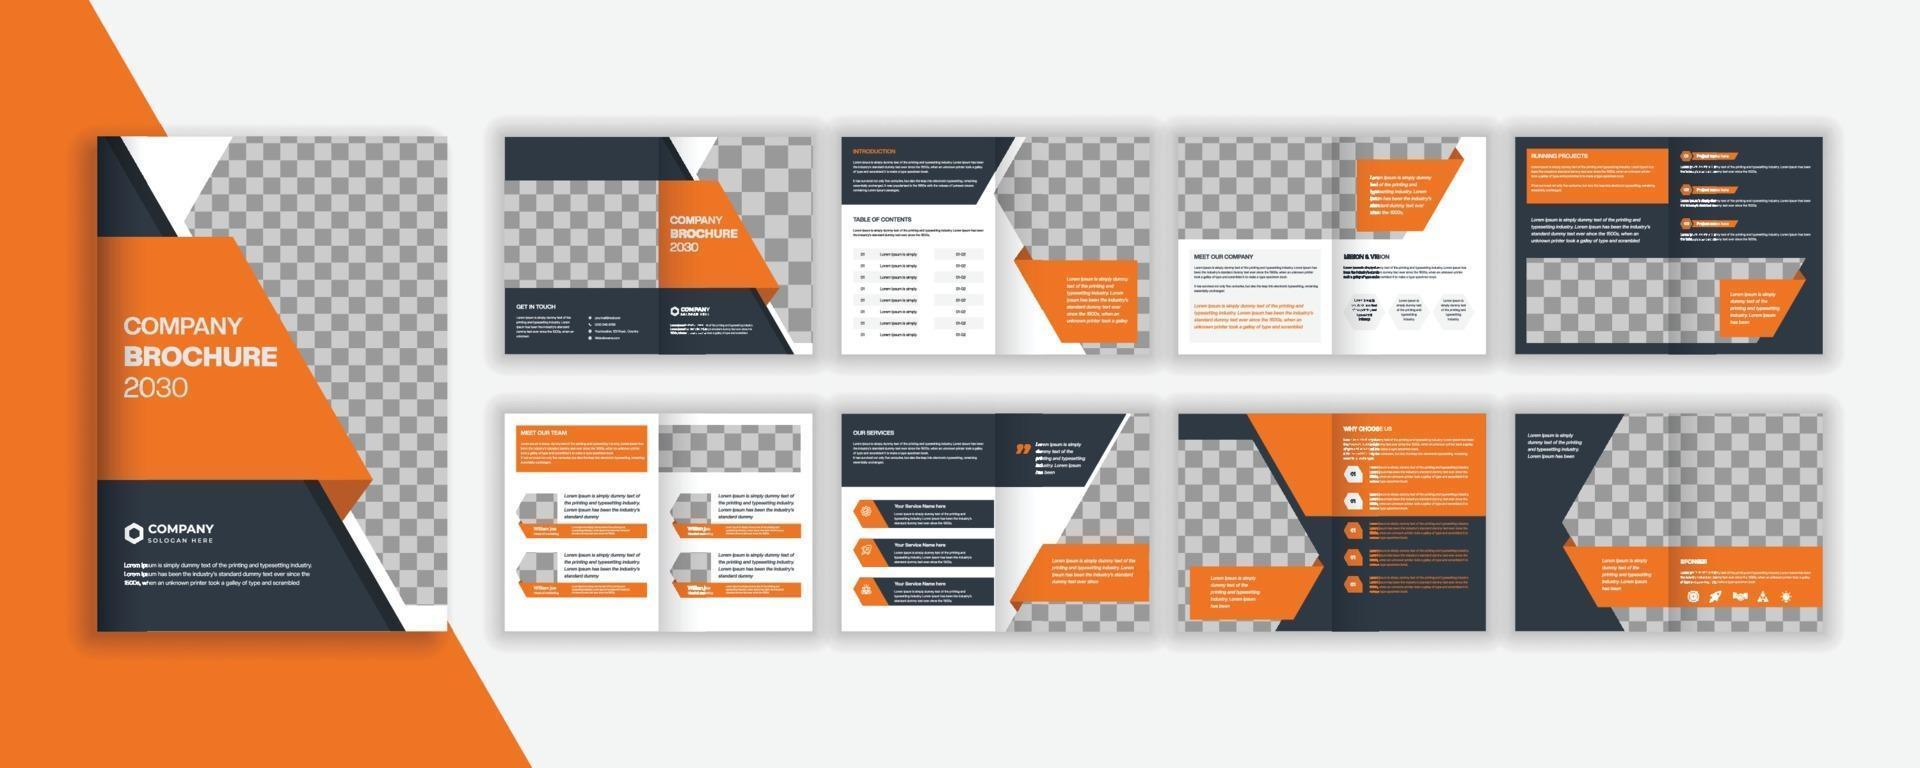 Company profile or business brochure design vector